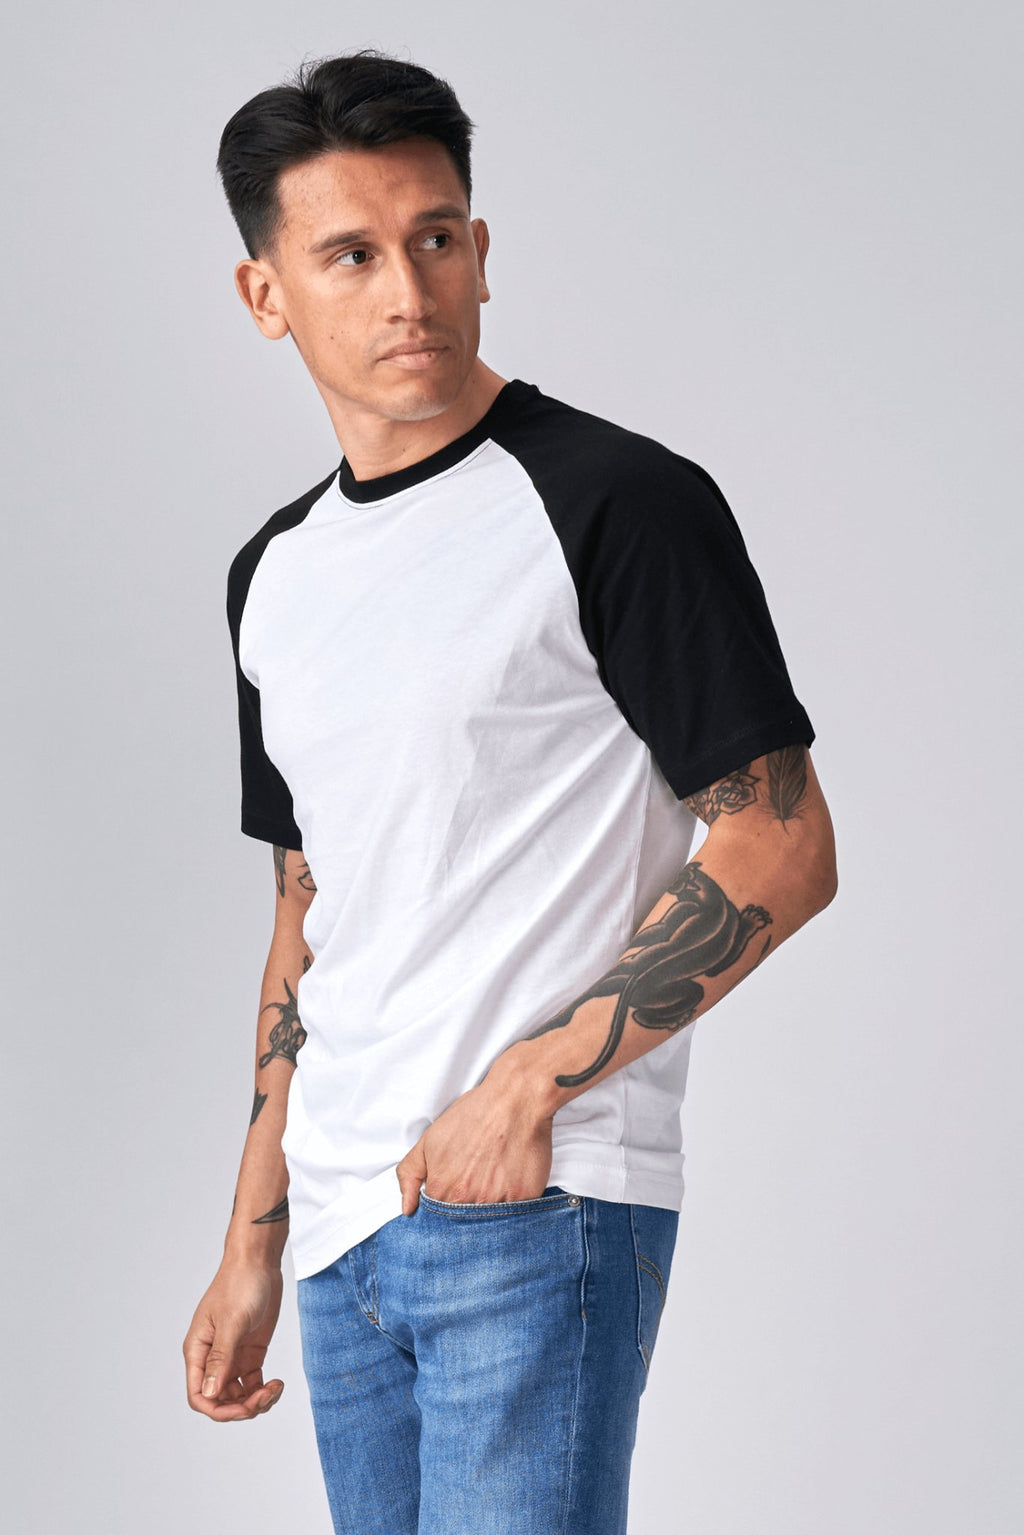 Basic raglan T-shirt - Black and white